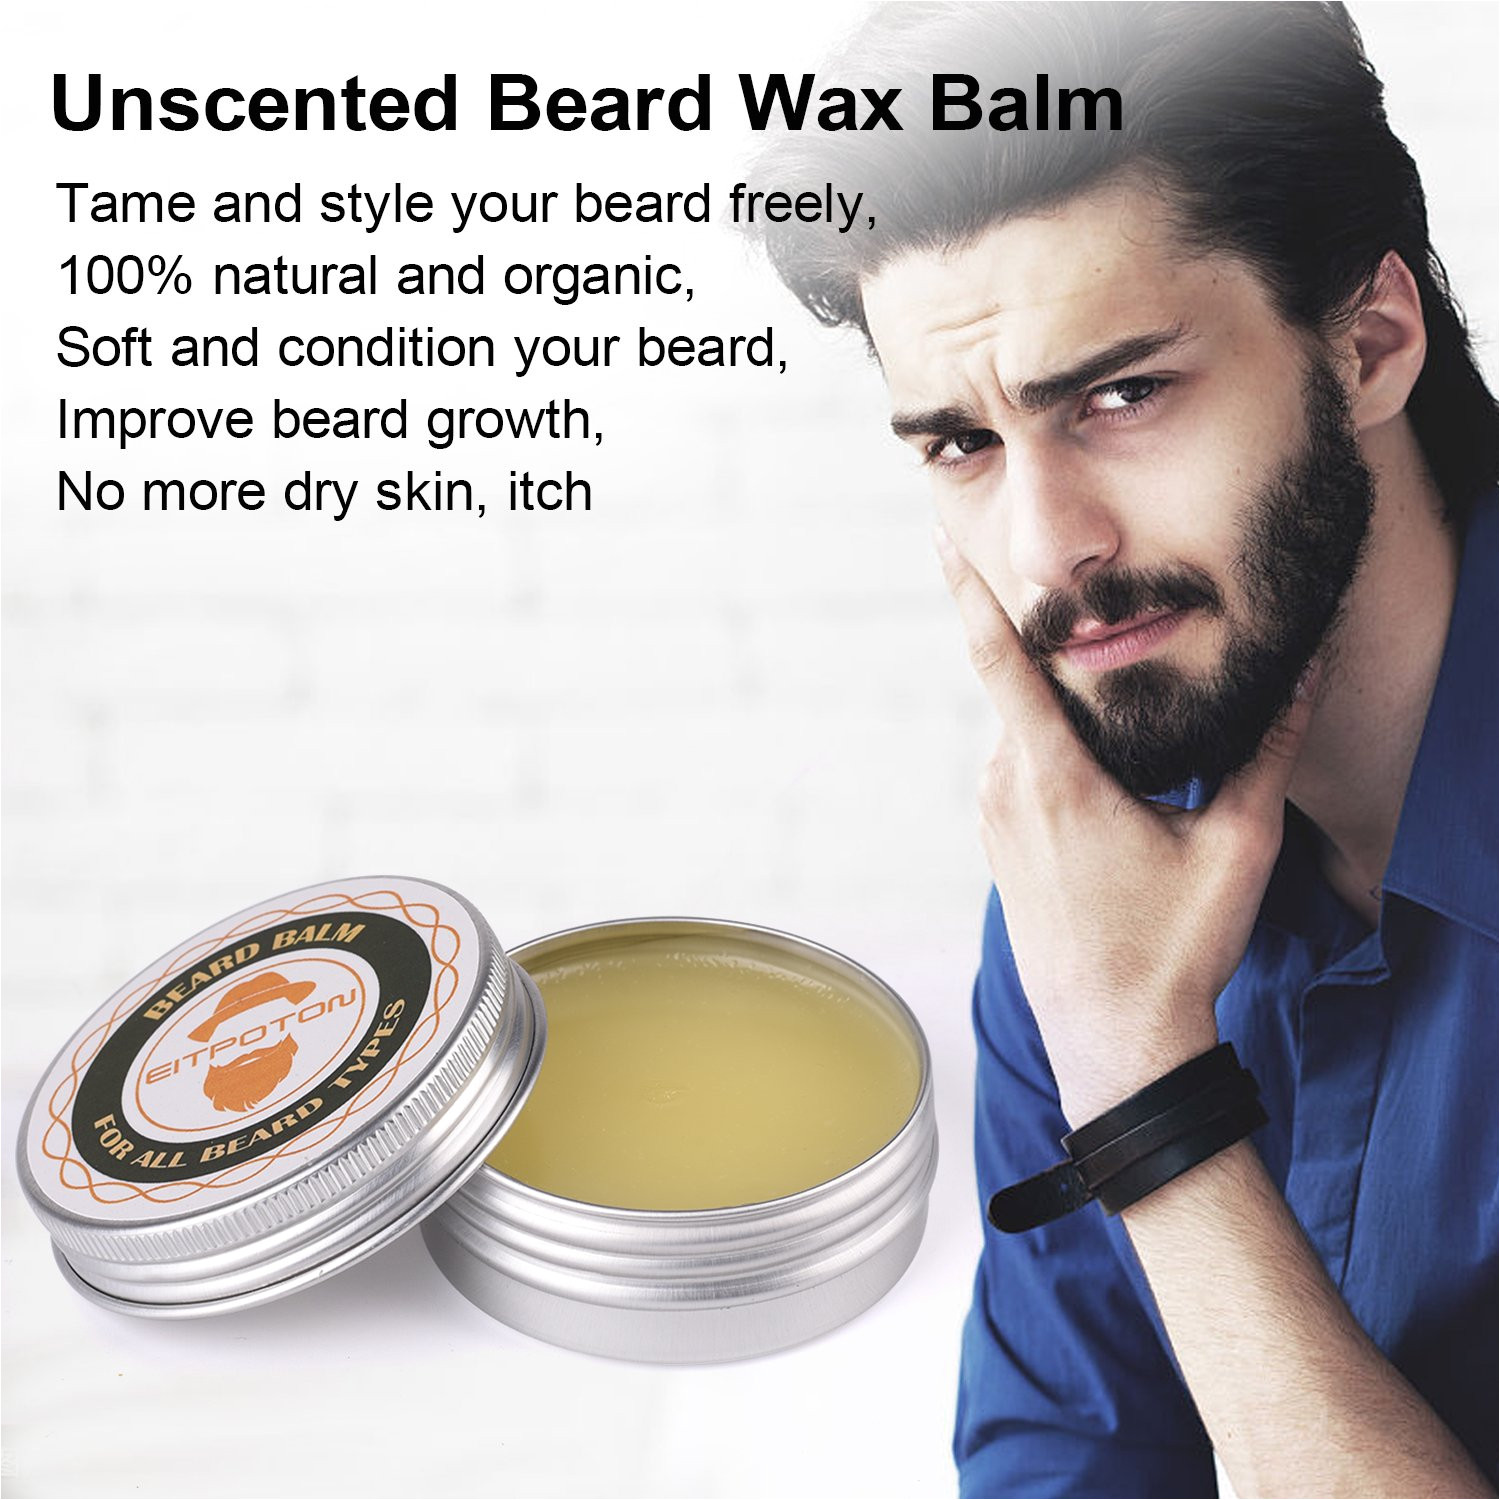 amazon com beard kit beard grooming trimming kit for men care eitpoton beard growth gift set with mustache beard balm wax unscented beard oil